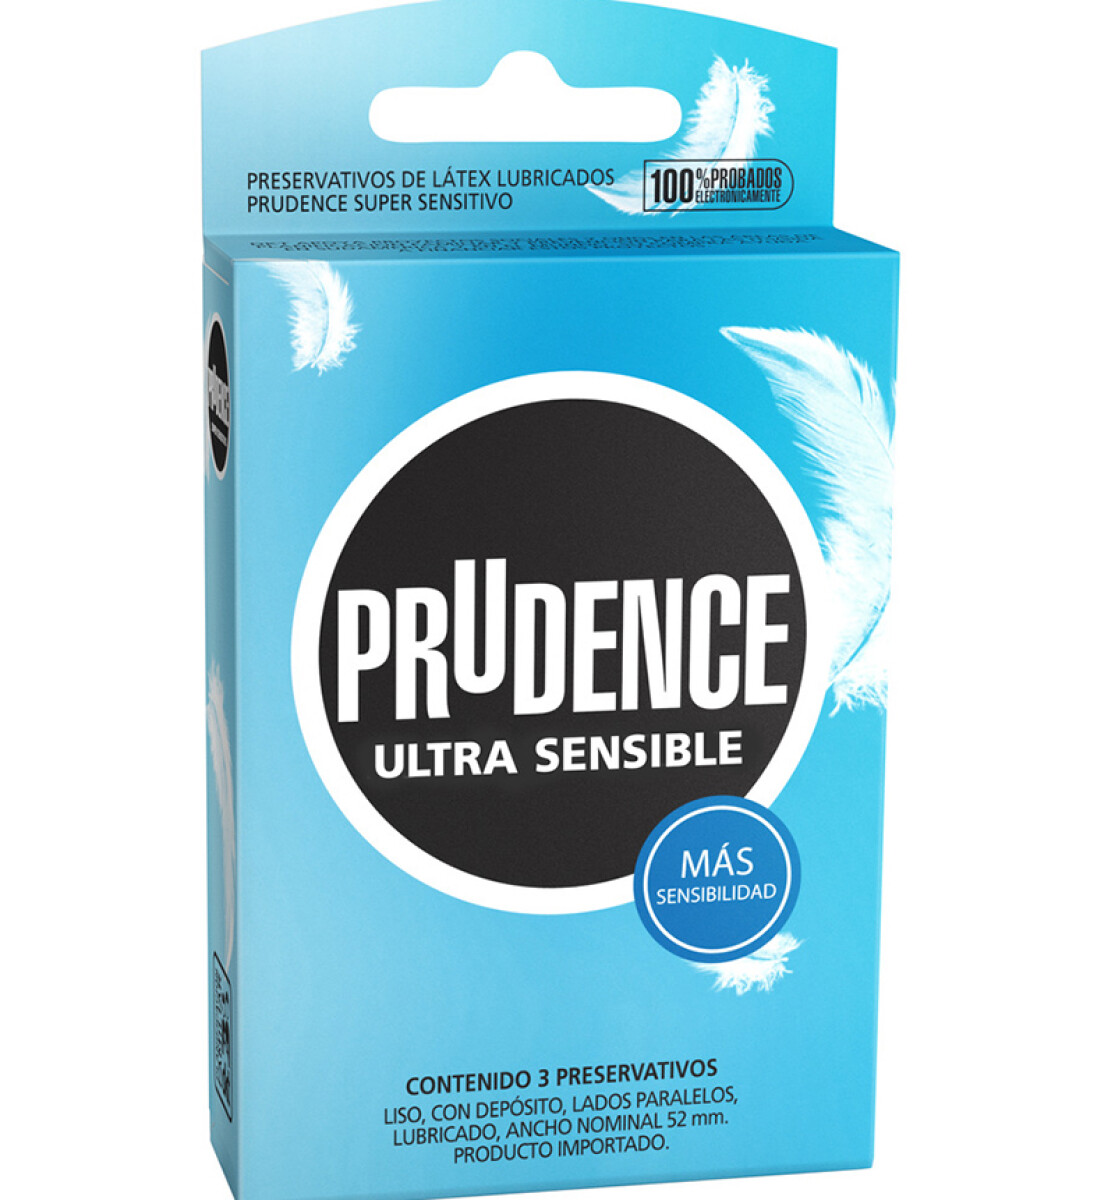 Preservativos Prudence - Ultra sensible 